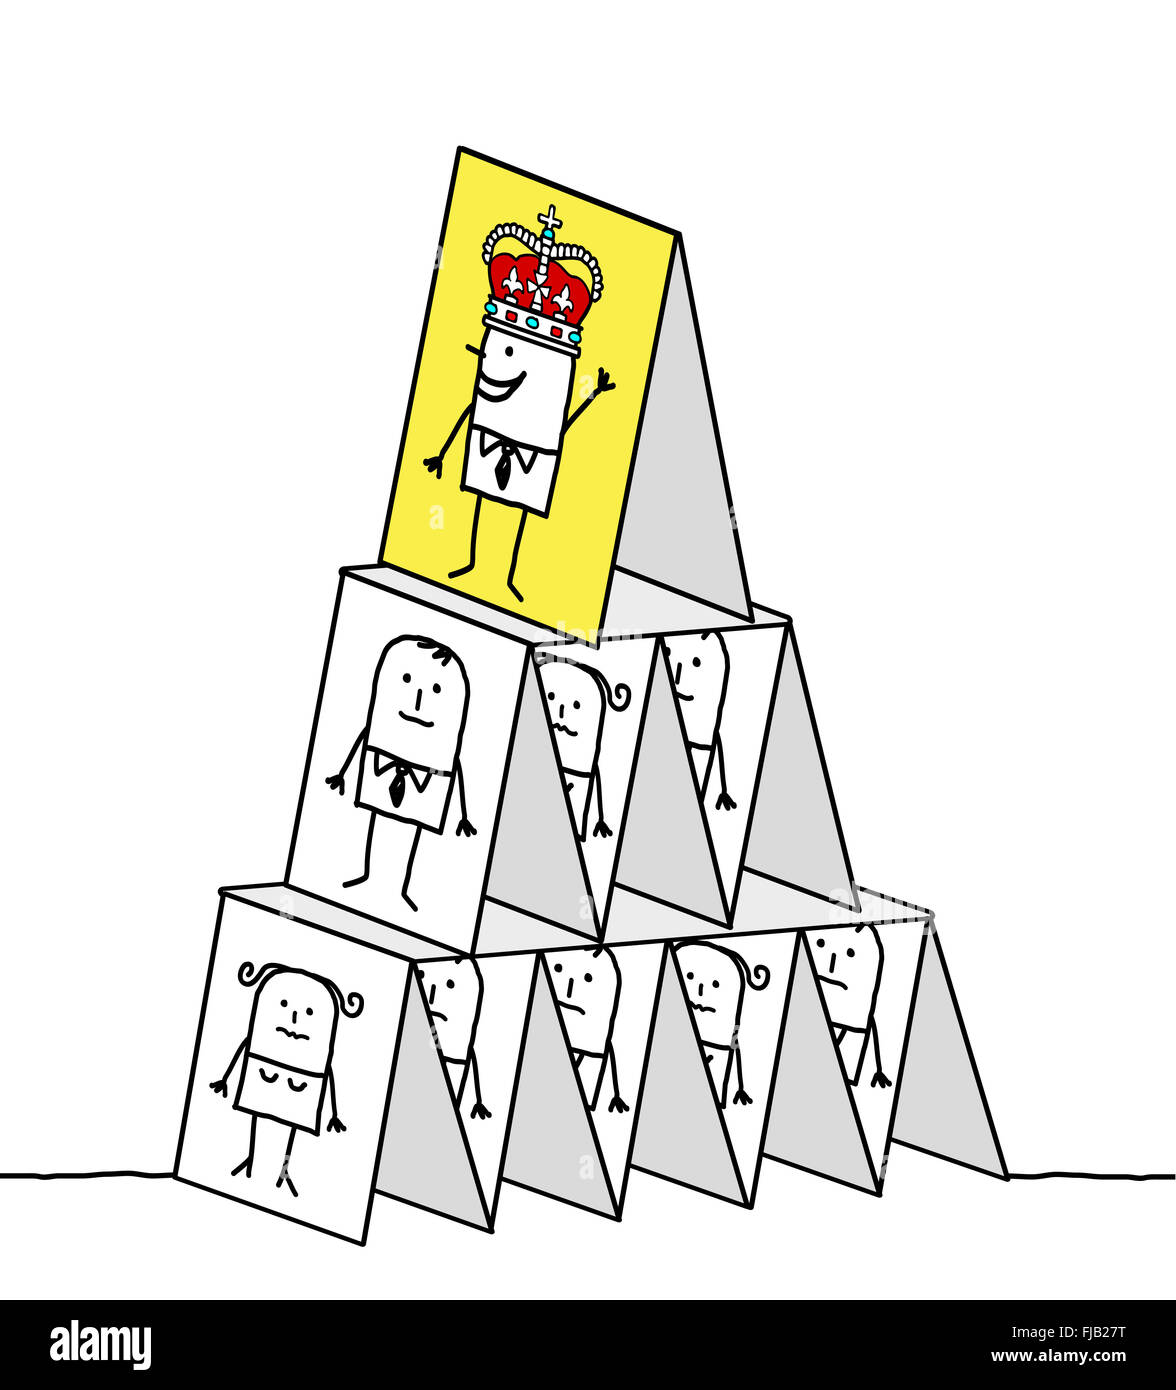 hand drawn cartoon characters - powerful king & cards pyramid Stock Photo